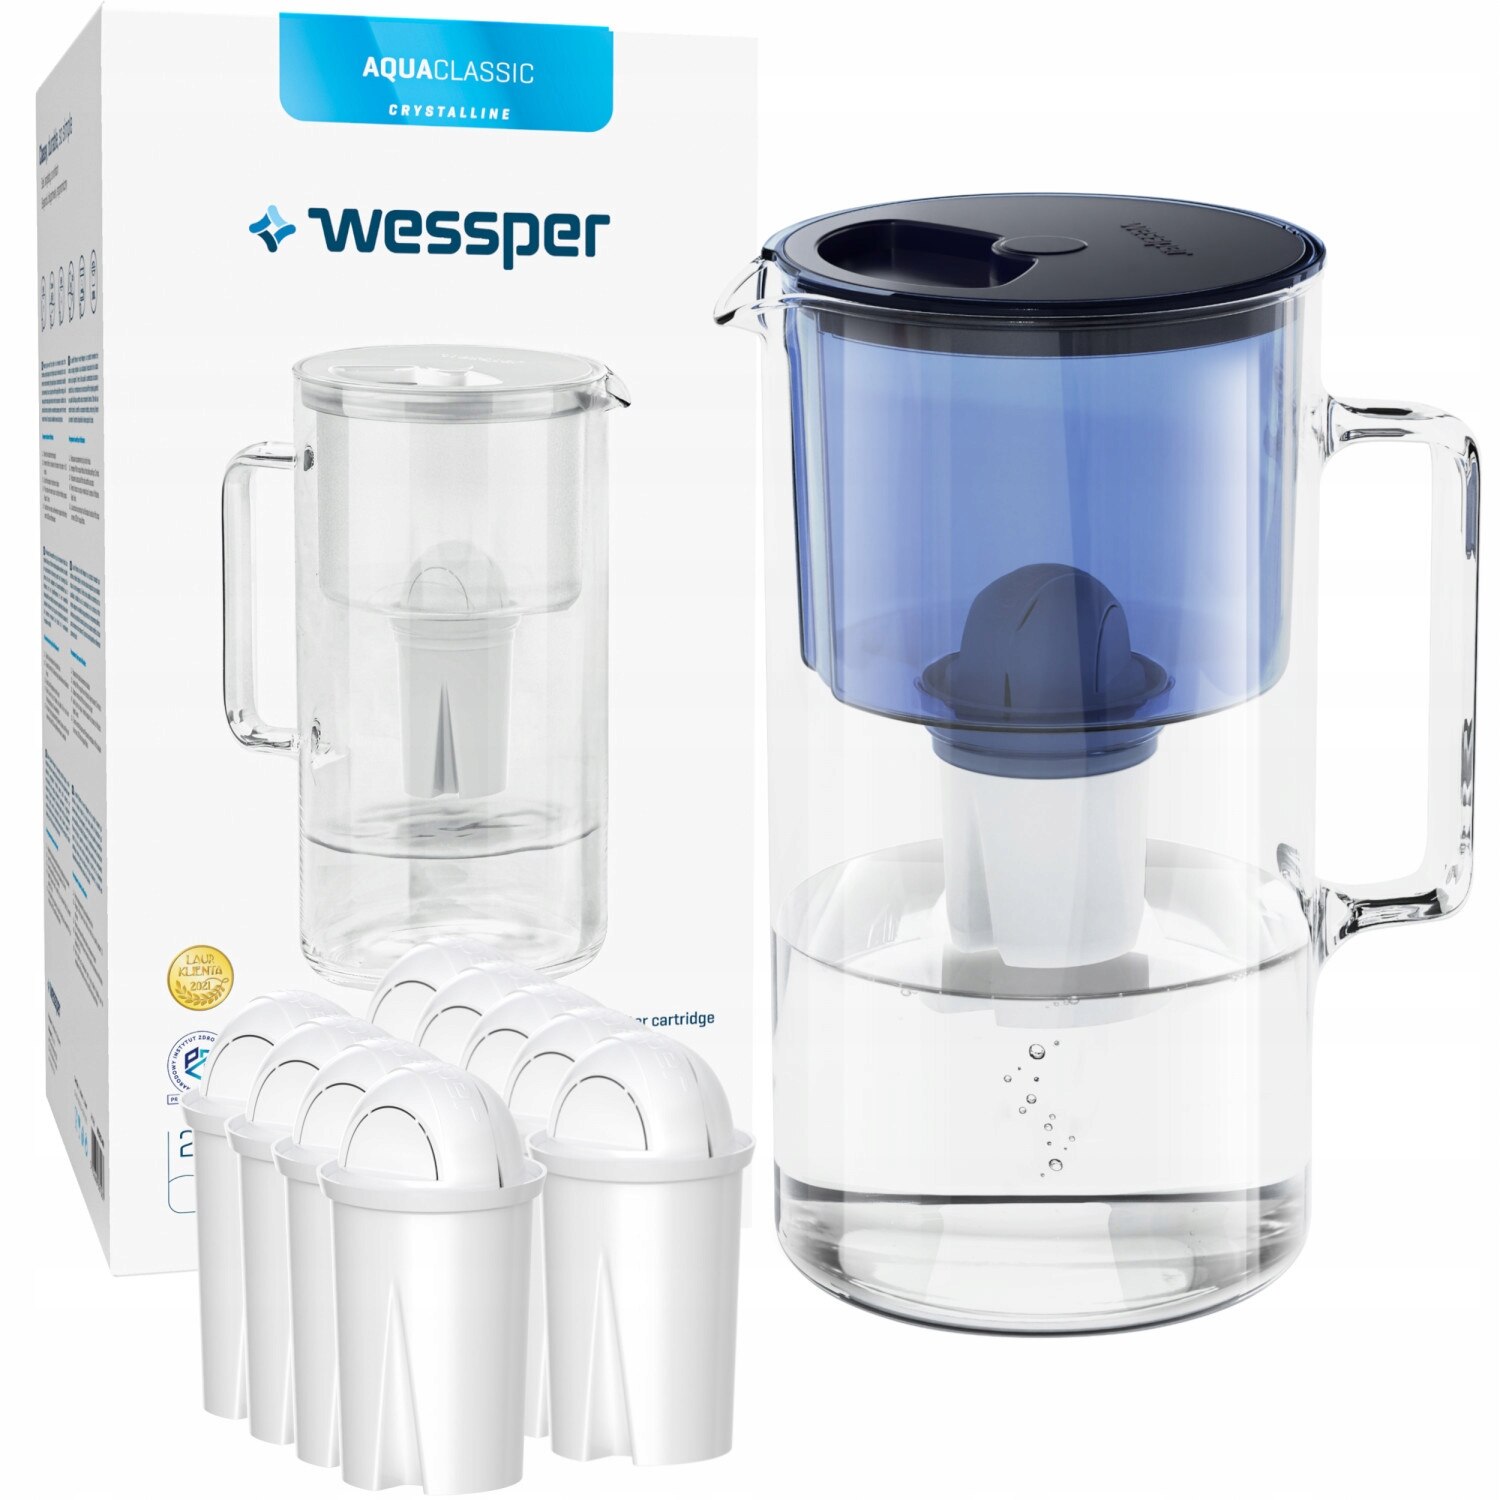 Carafe filtrante à eau avec 1 filtre inclus - Wessper AquaMax